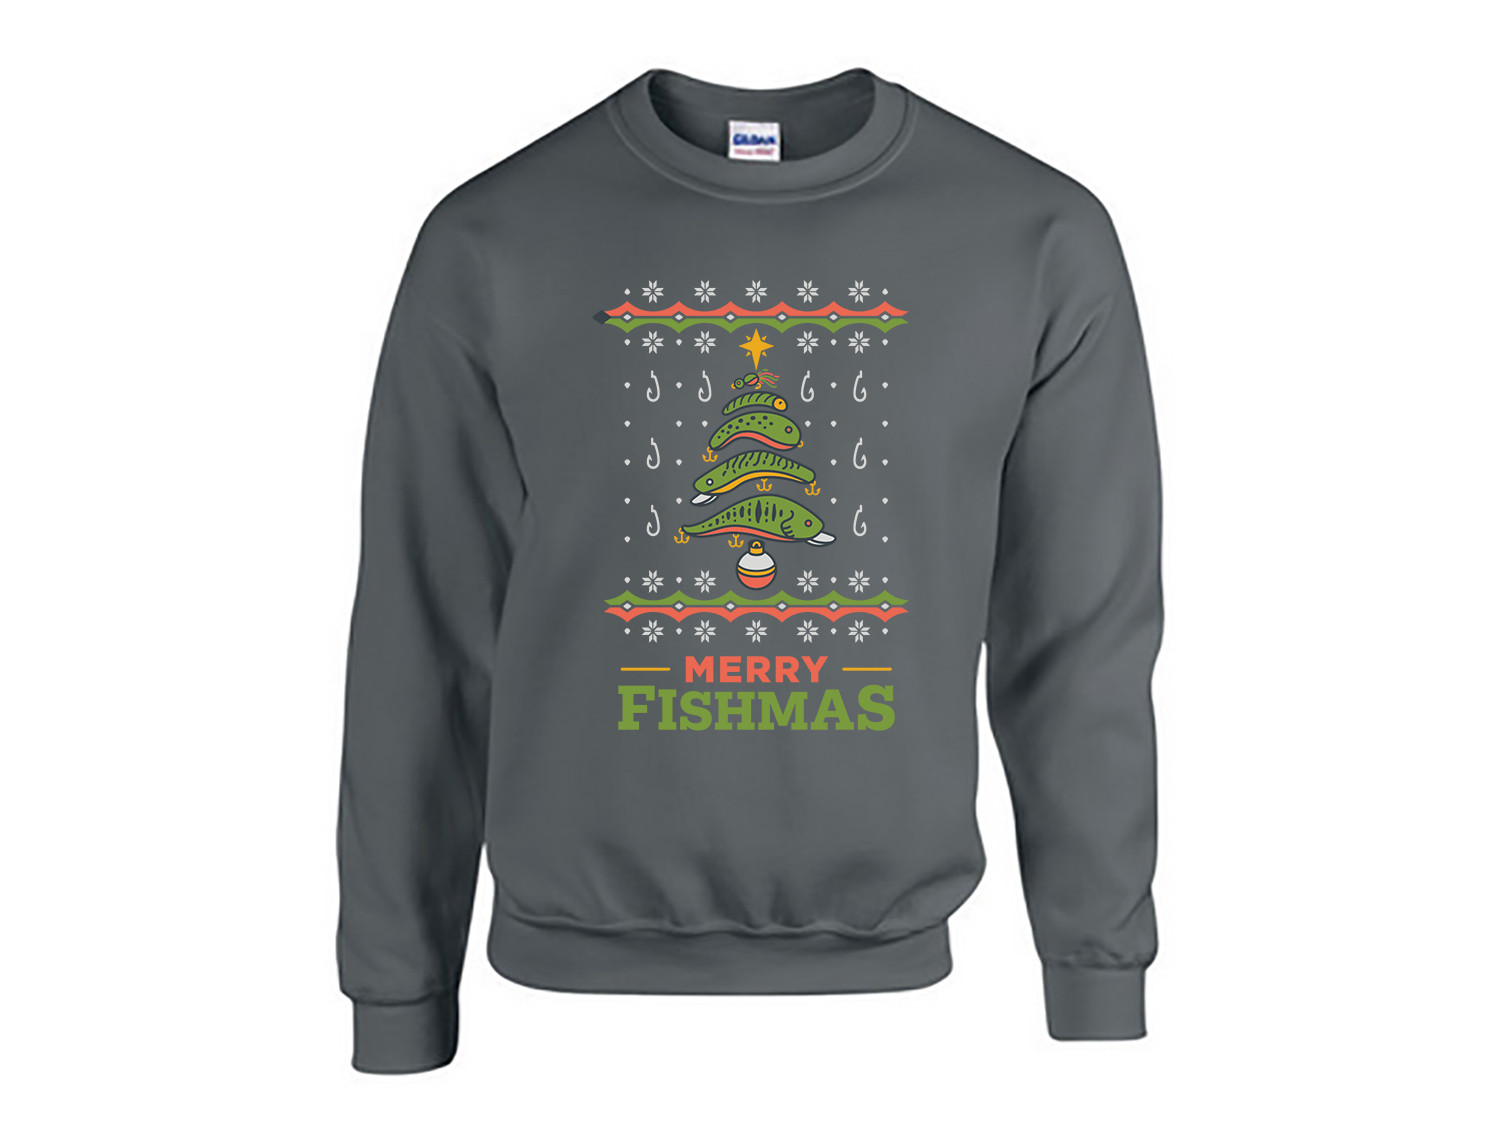 Merry Fishmas Sweatshirt Small Charcoal 1pack